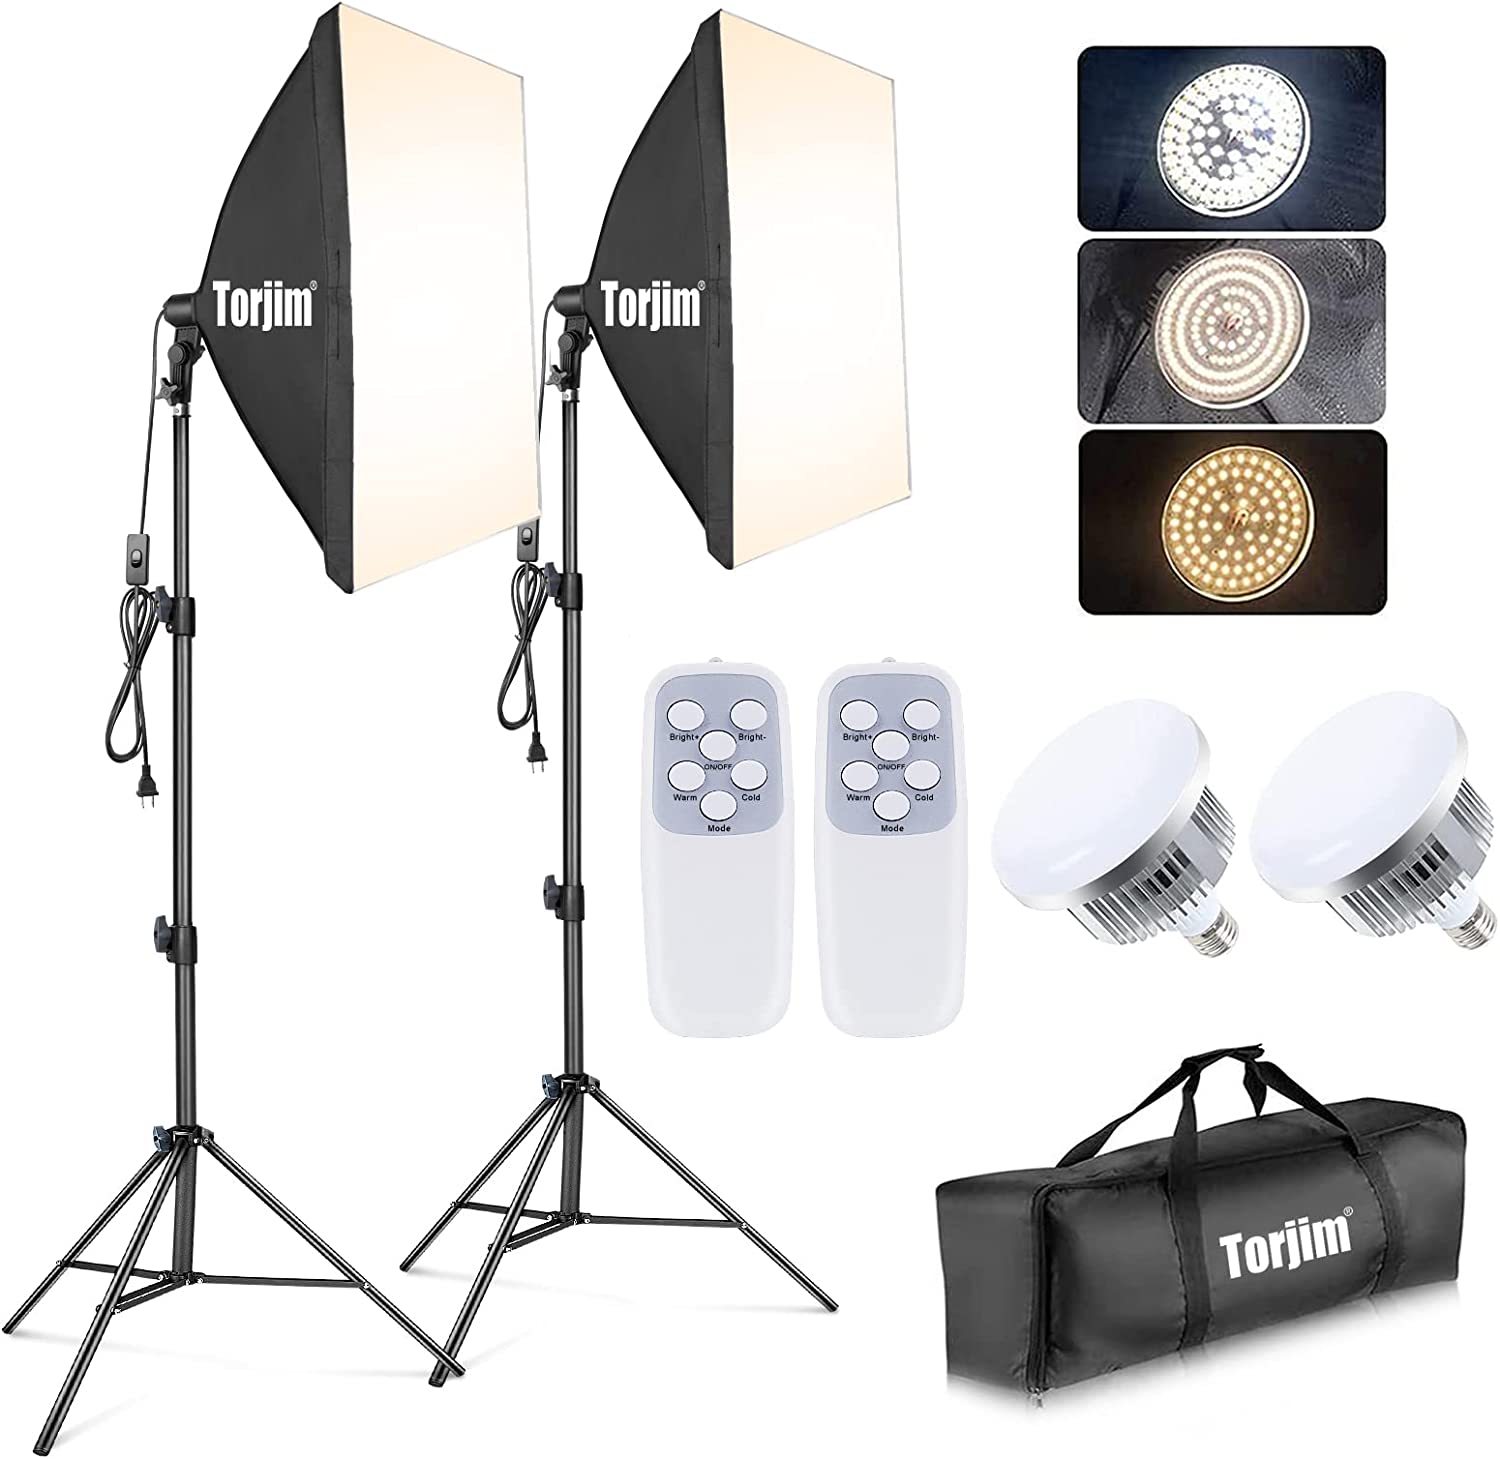 Torjim Softbox Photography Lighting Kit, Professional Photo Studio Lighting with 2x27x27in Soft Box